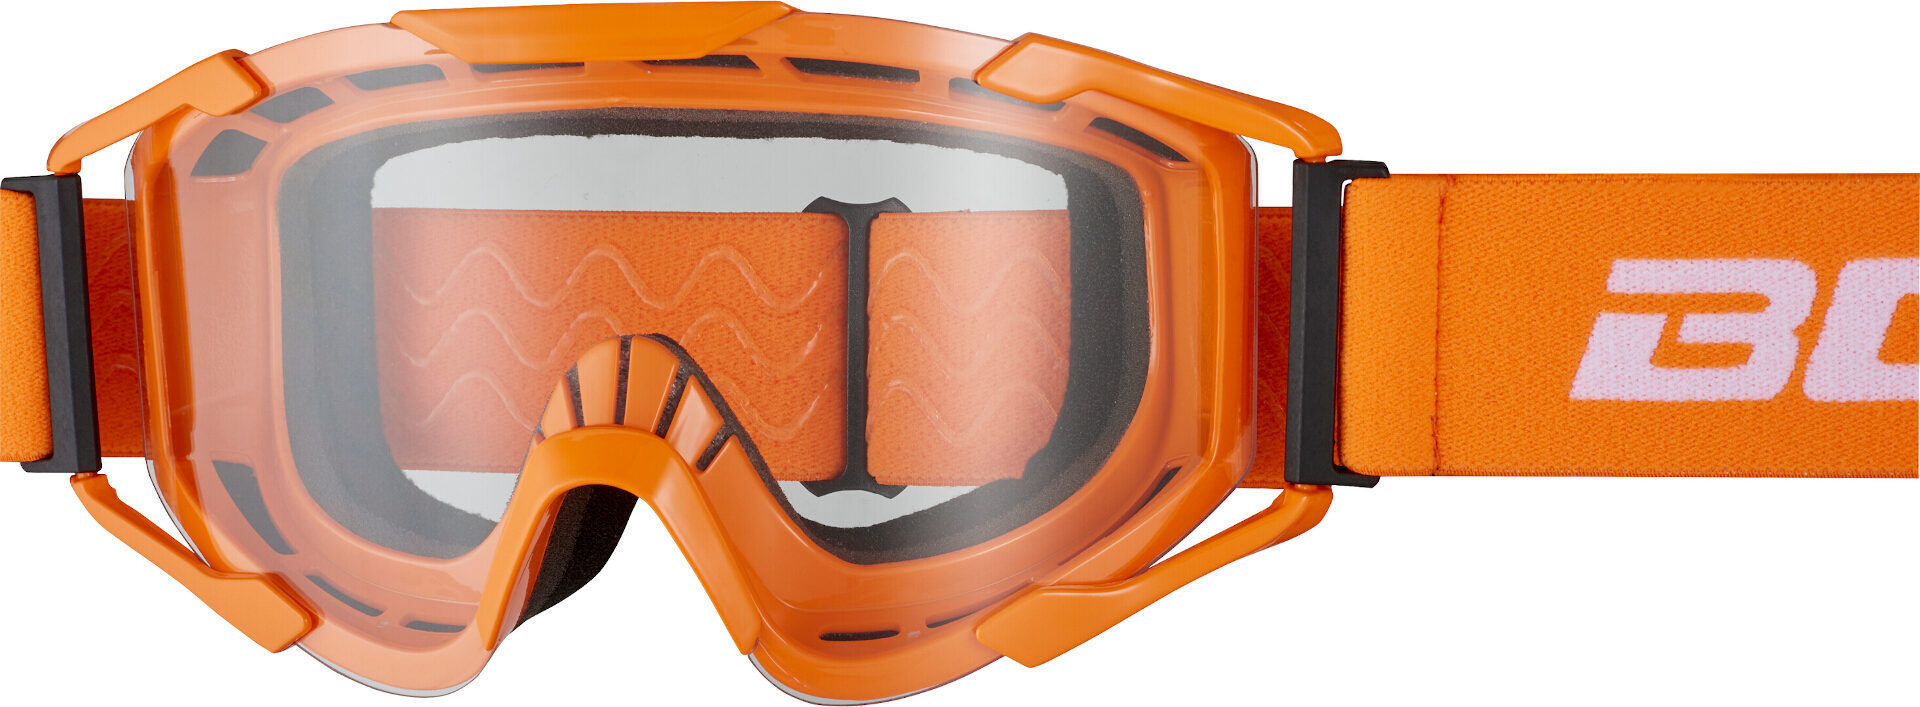 Bogotto B-St Motocross Goggles  - White Orange